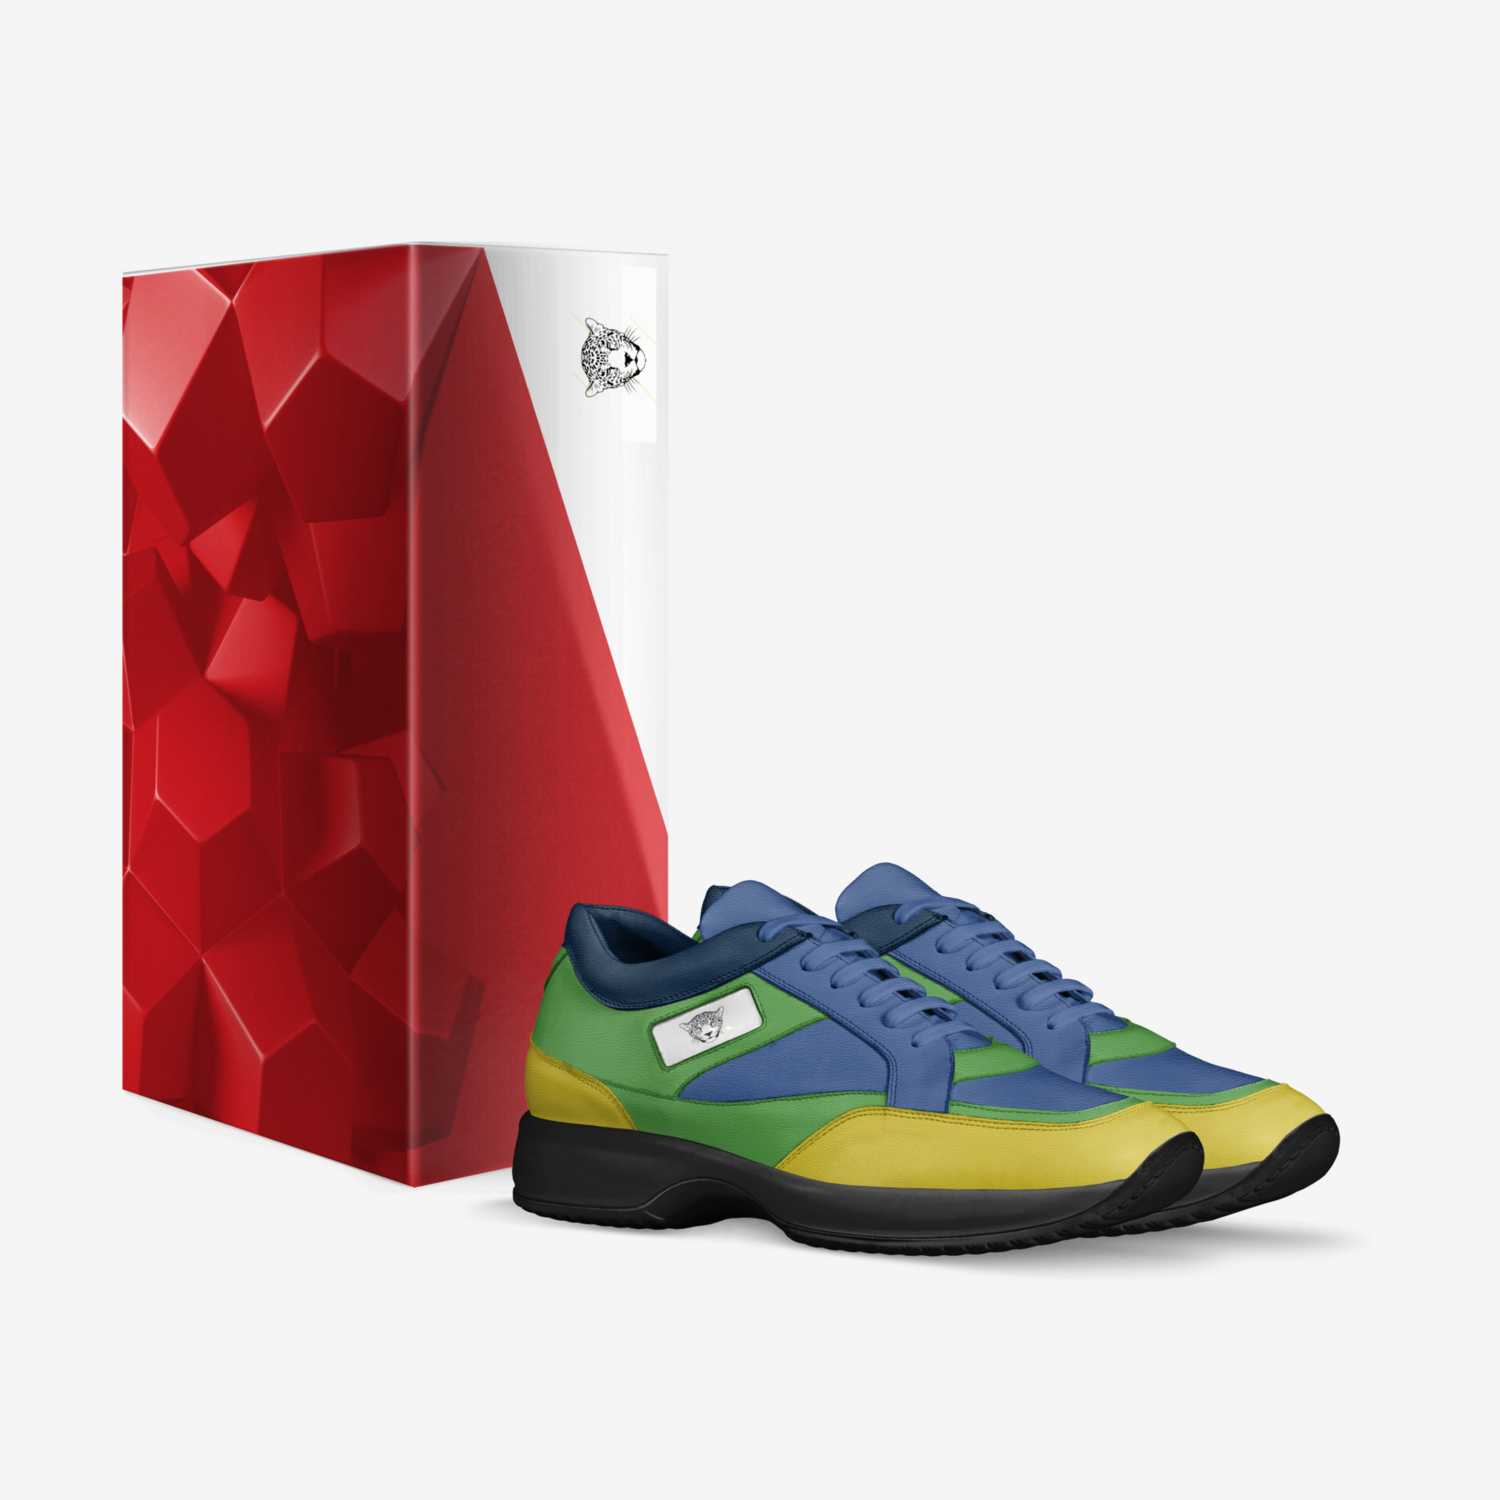 Brazillian sport custom made in Italy shoes by Sammi Stark | Box view